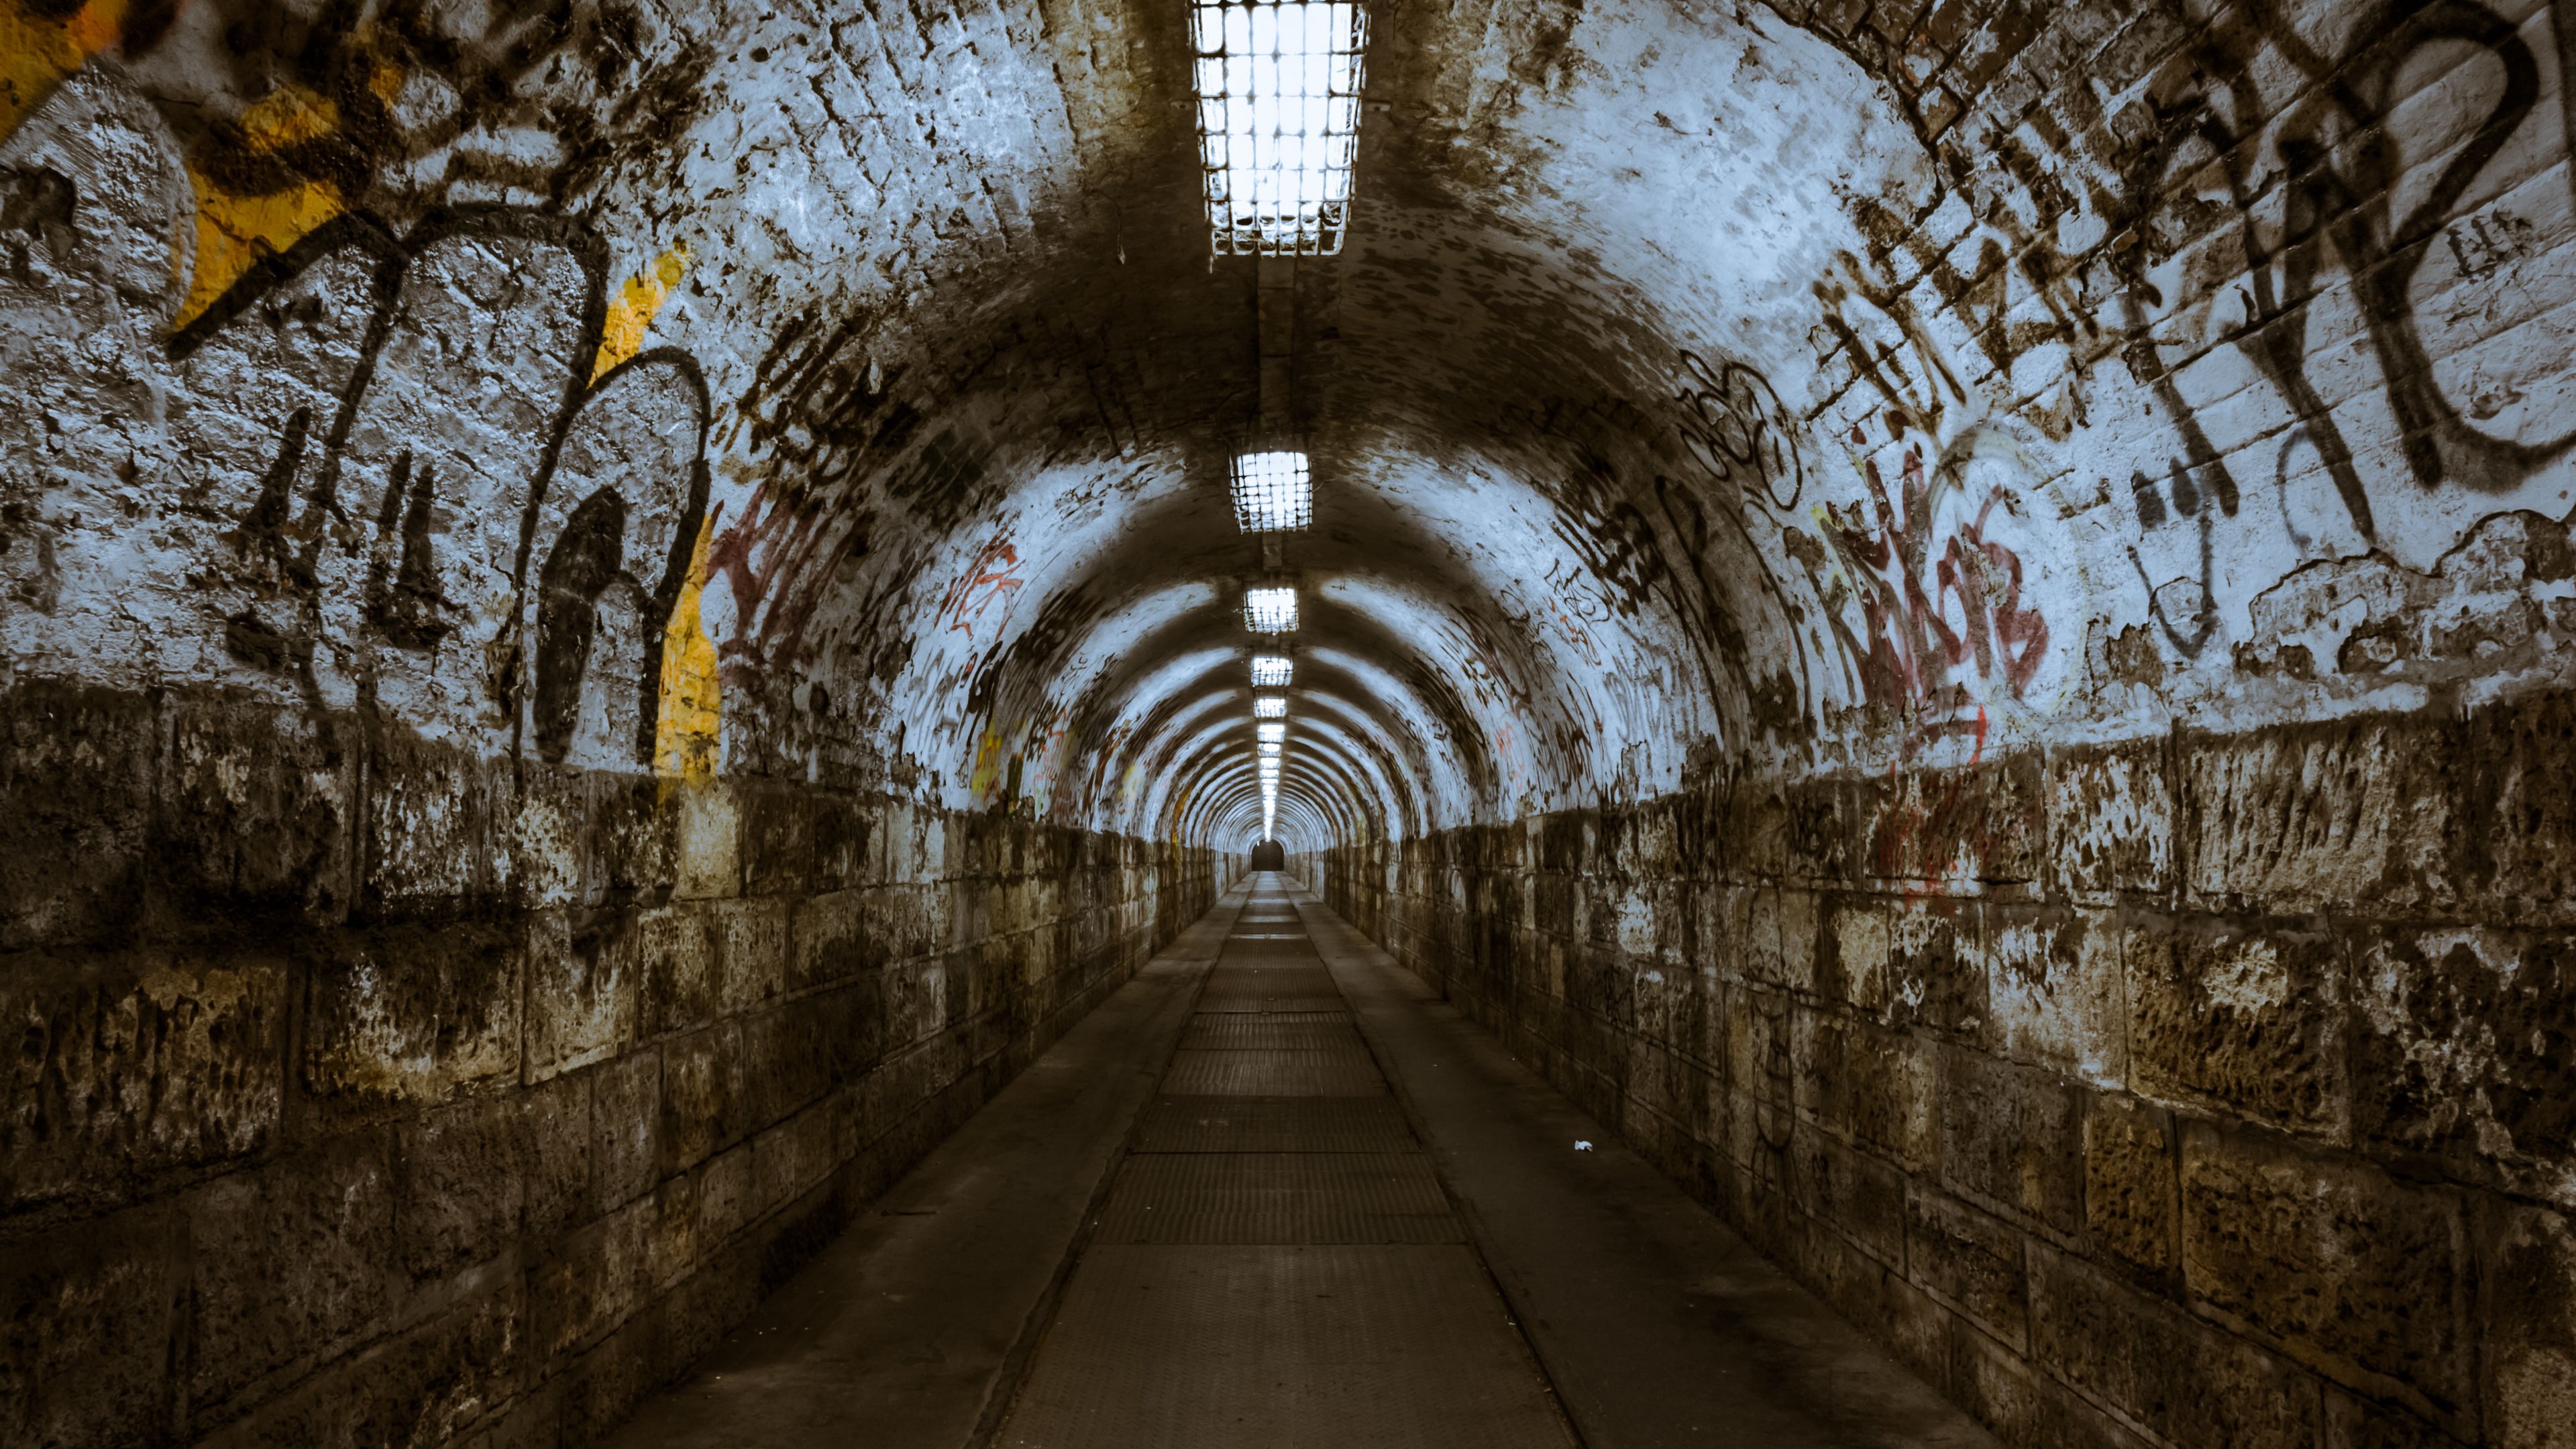 General 3840x2160 tunnel underground urban decay graffiti